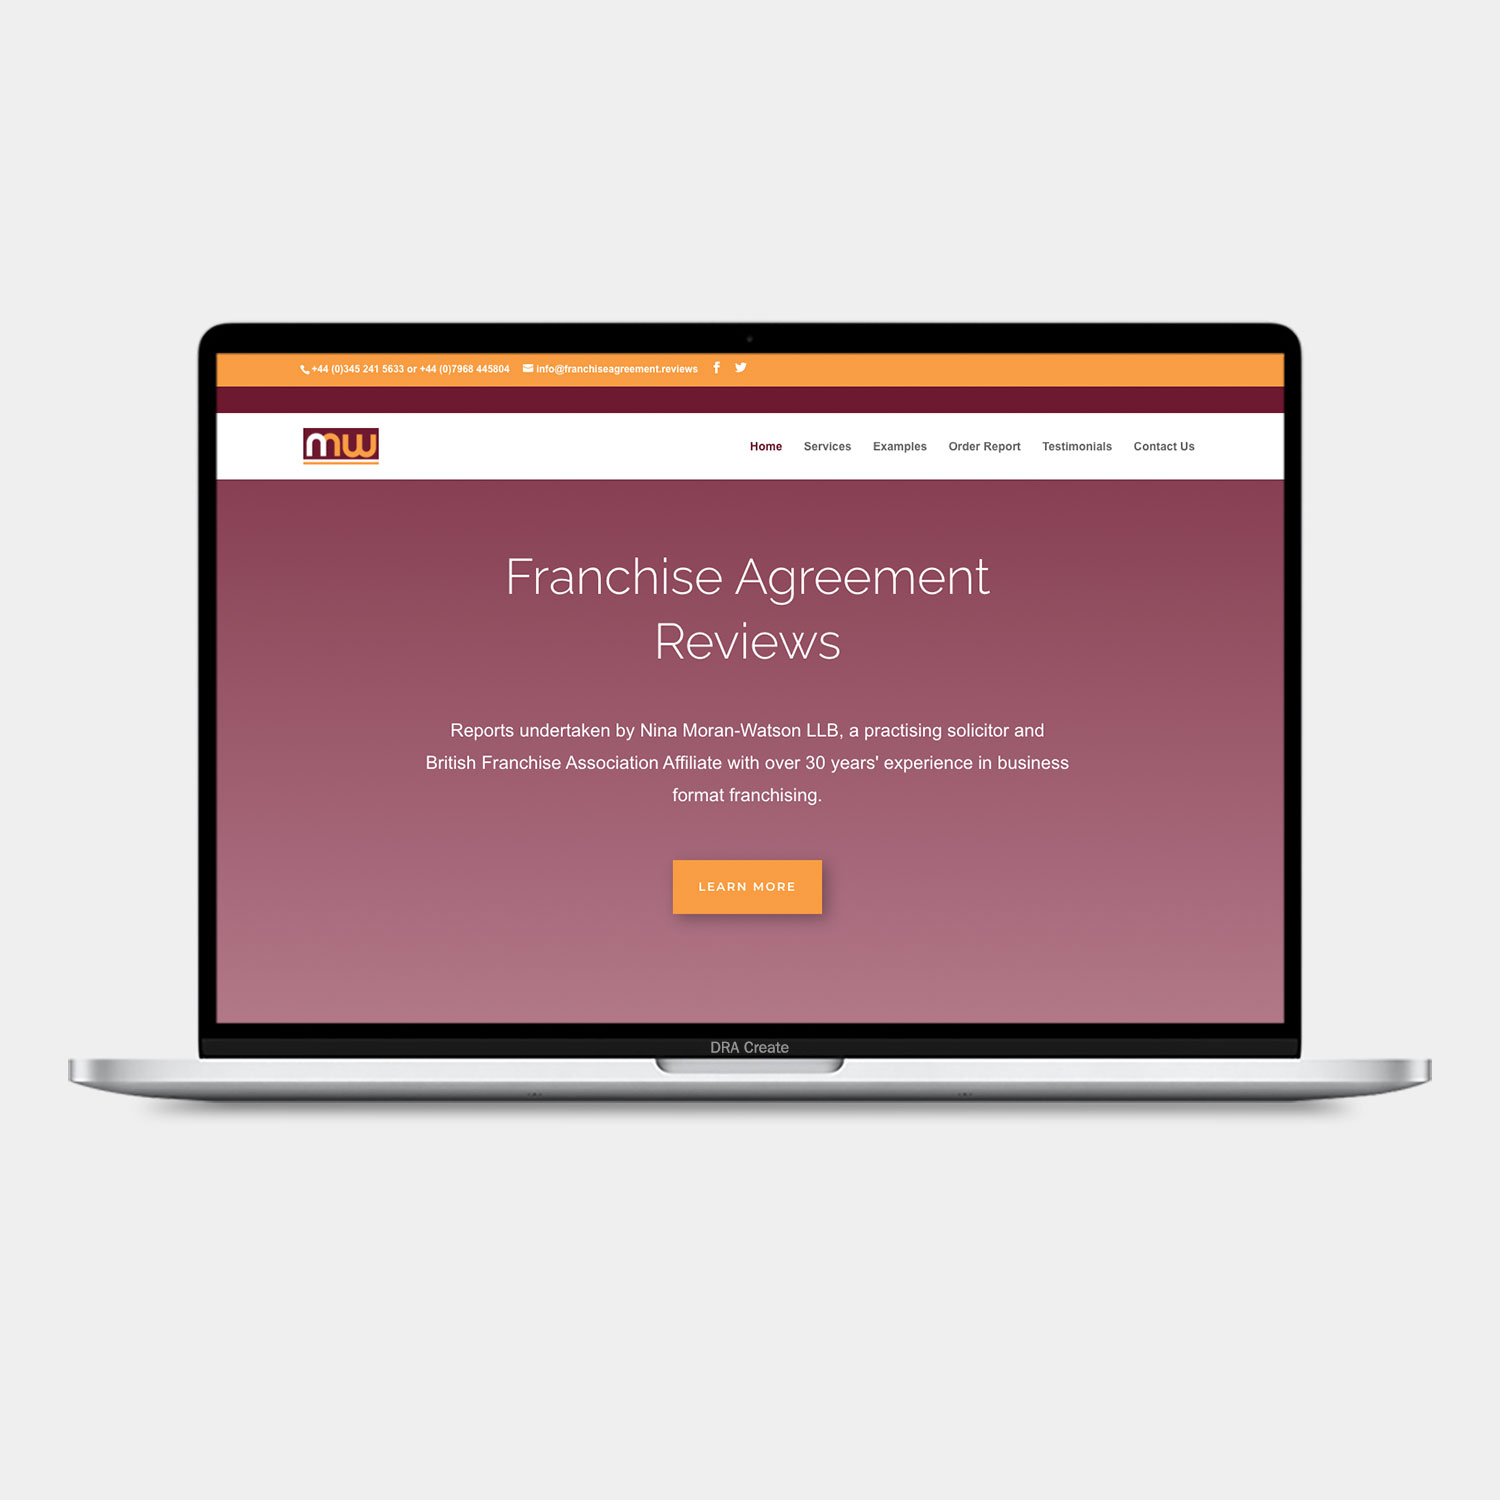 Franchise Agreement Reviews website design